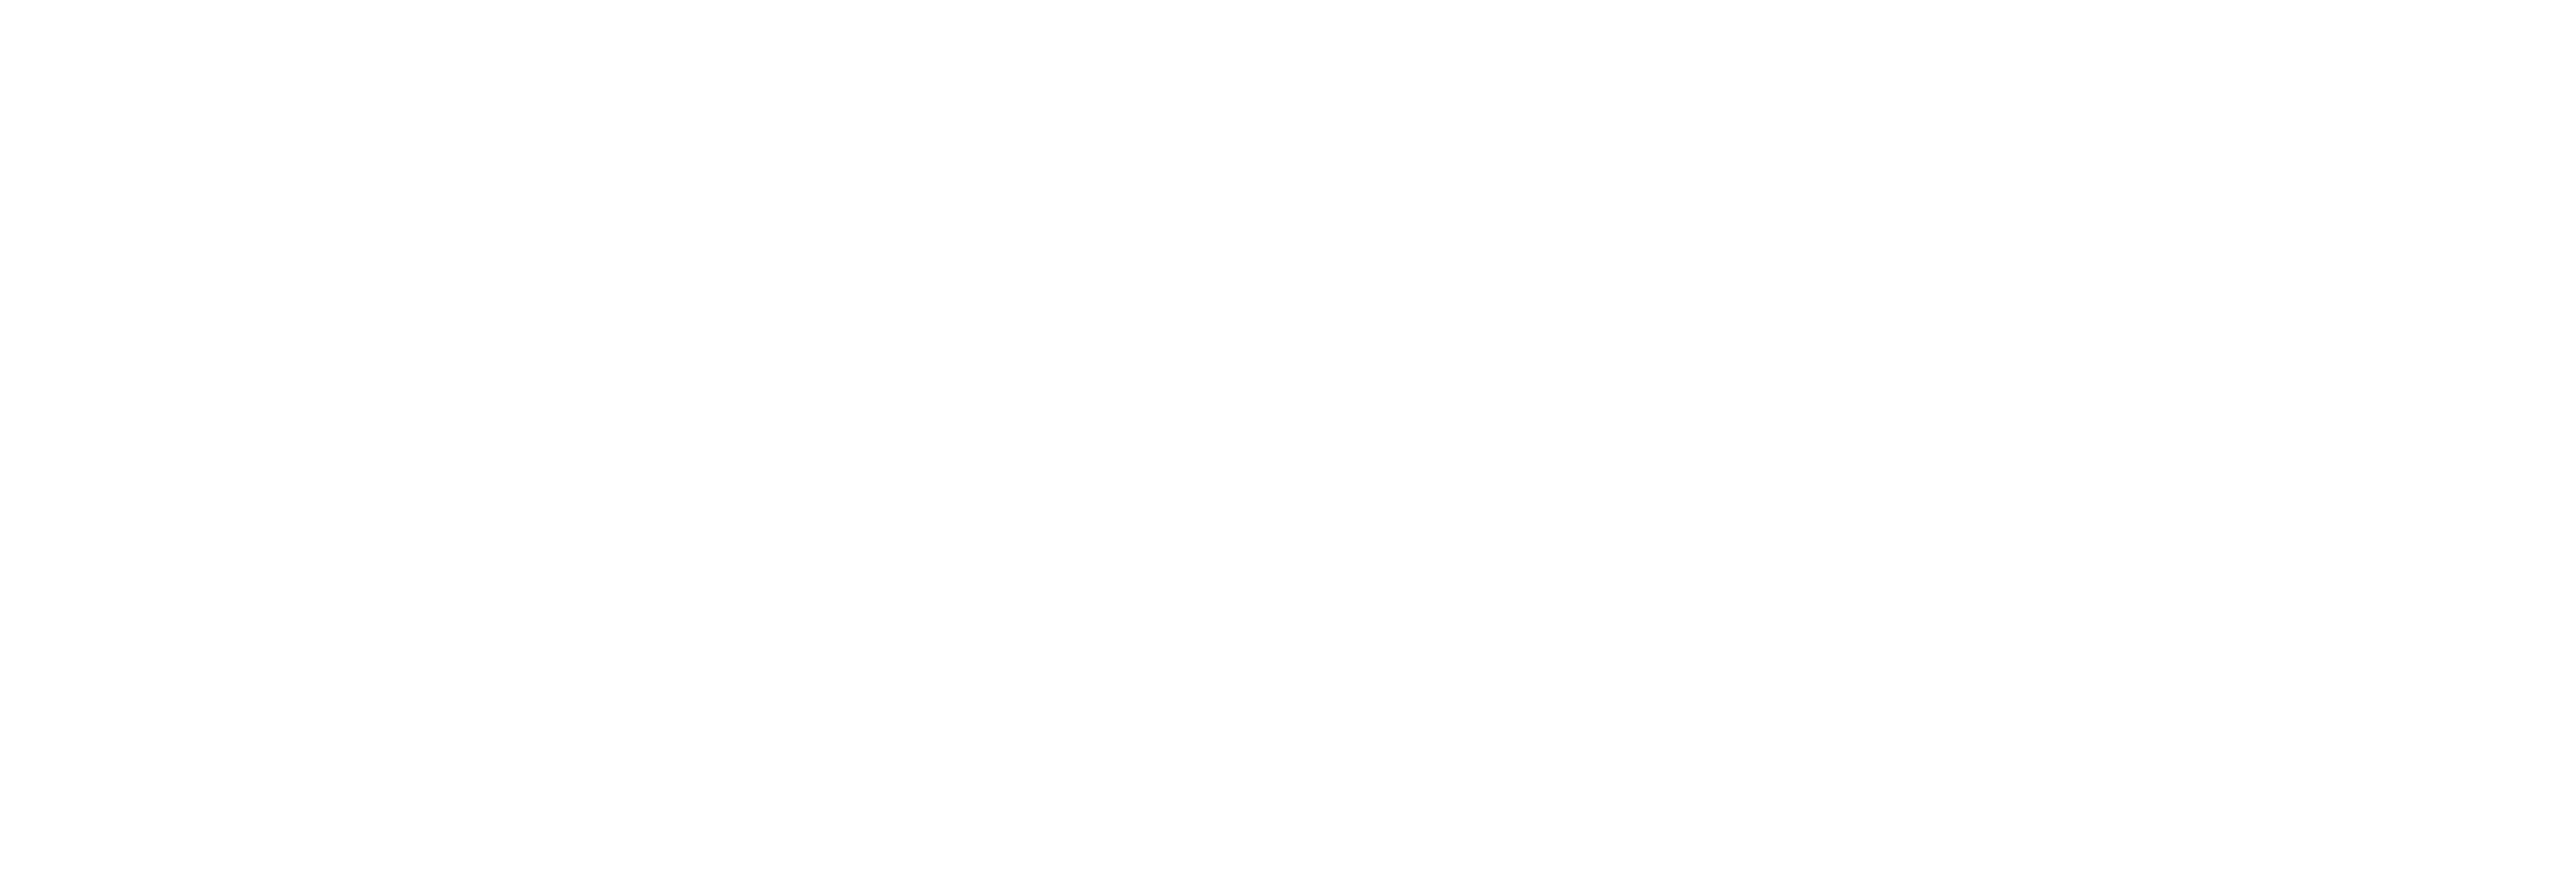 XITpro System